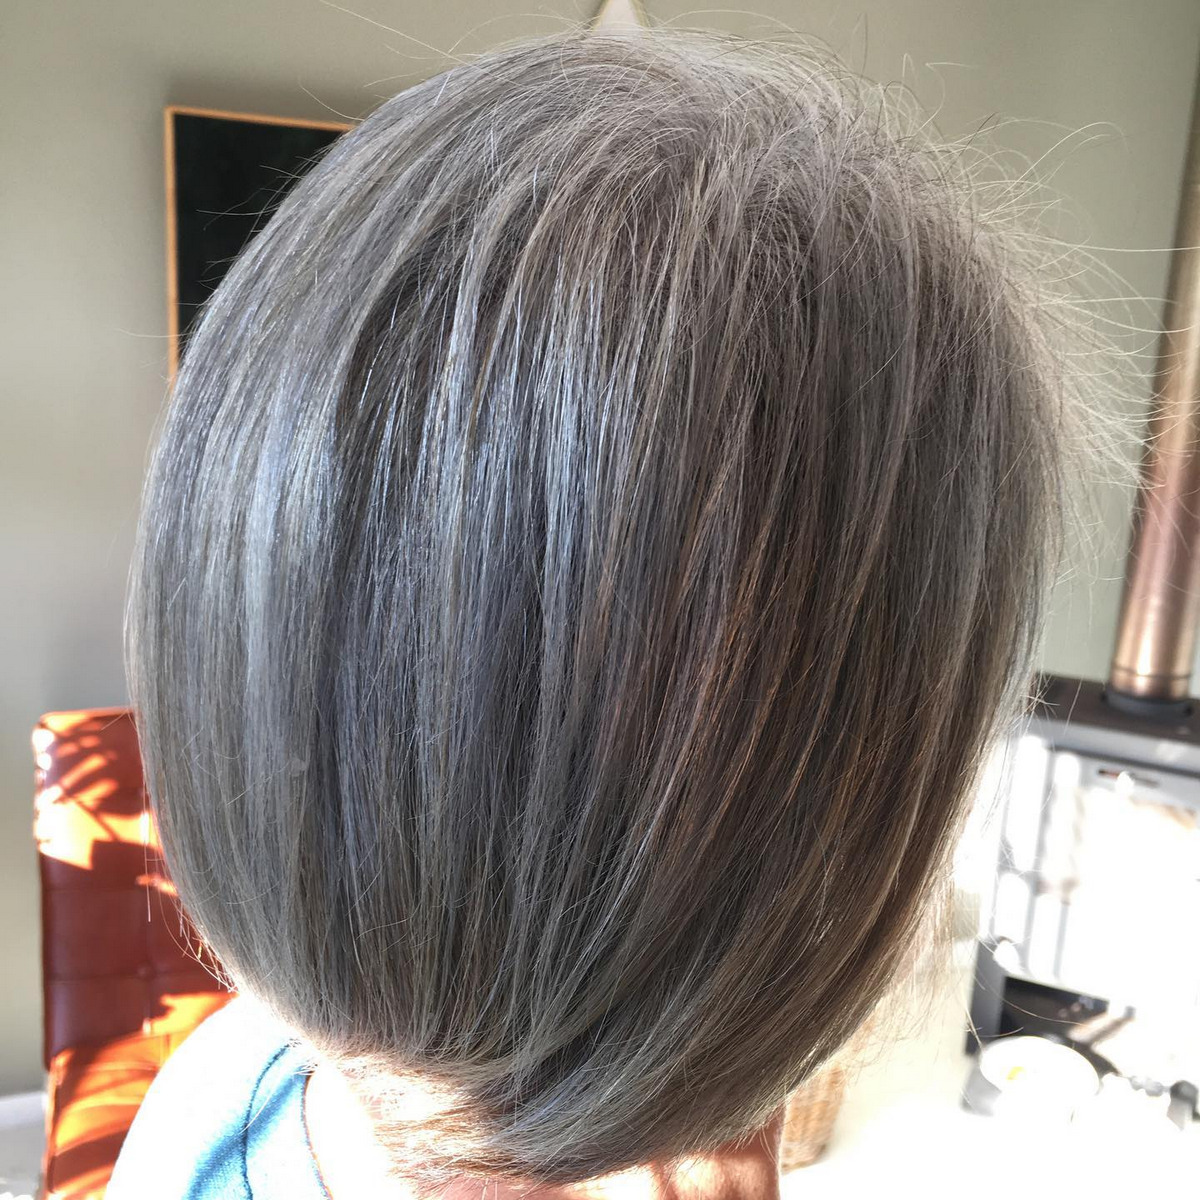 Brown-Gray Round Bob Hair